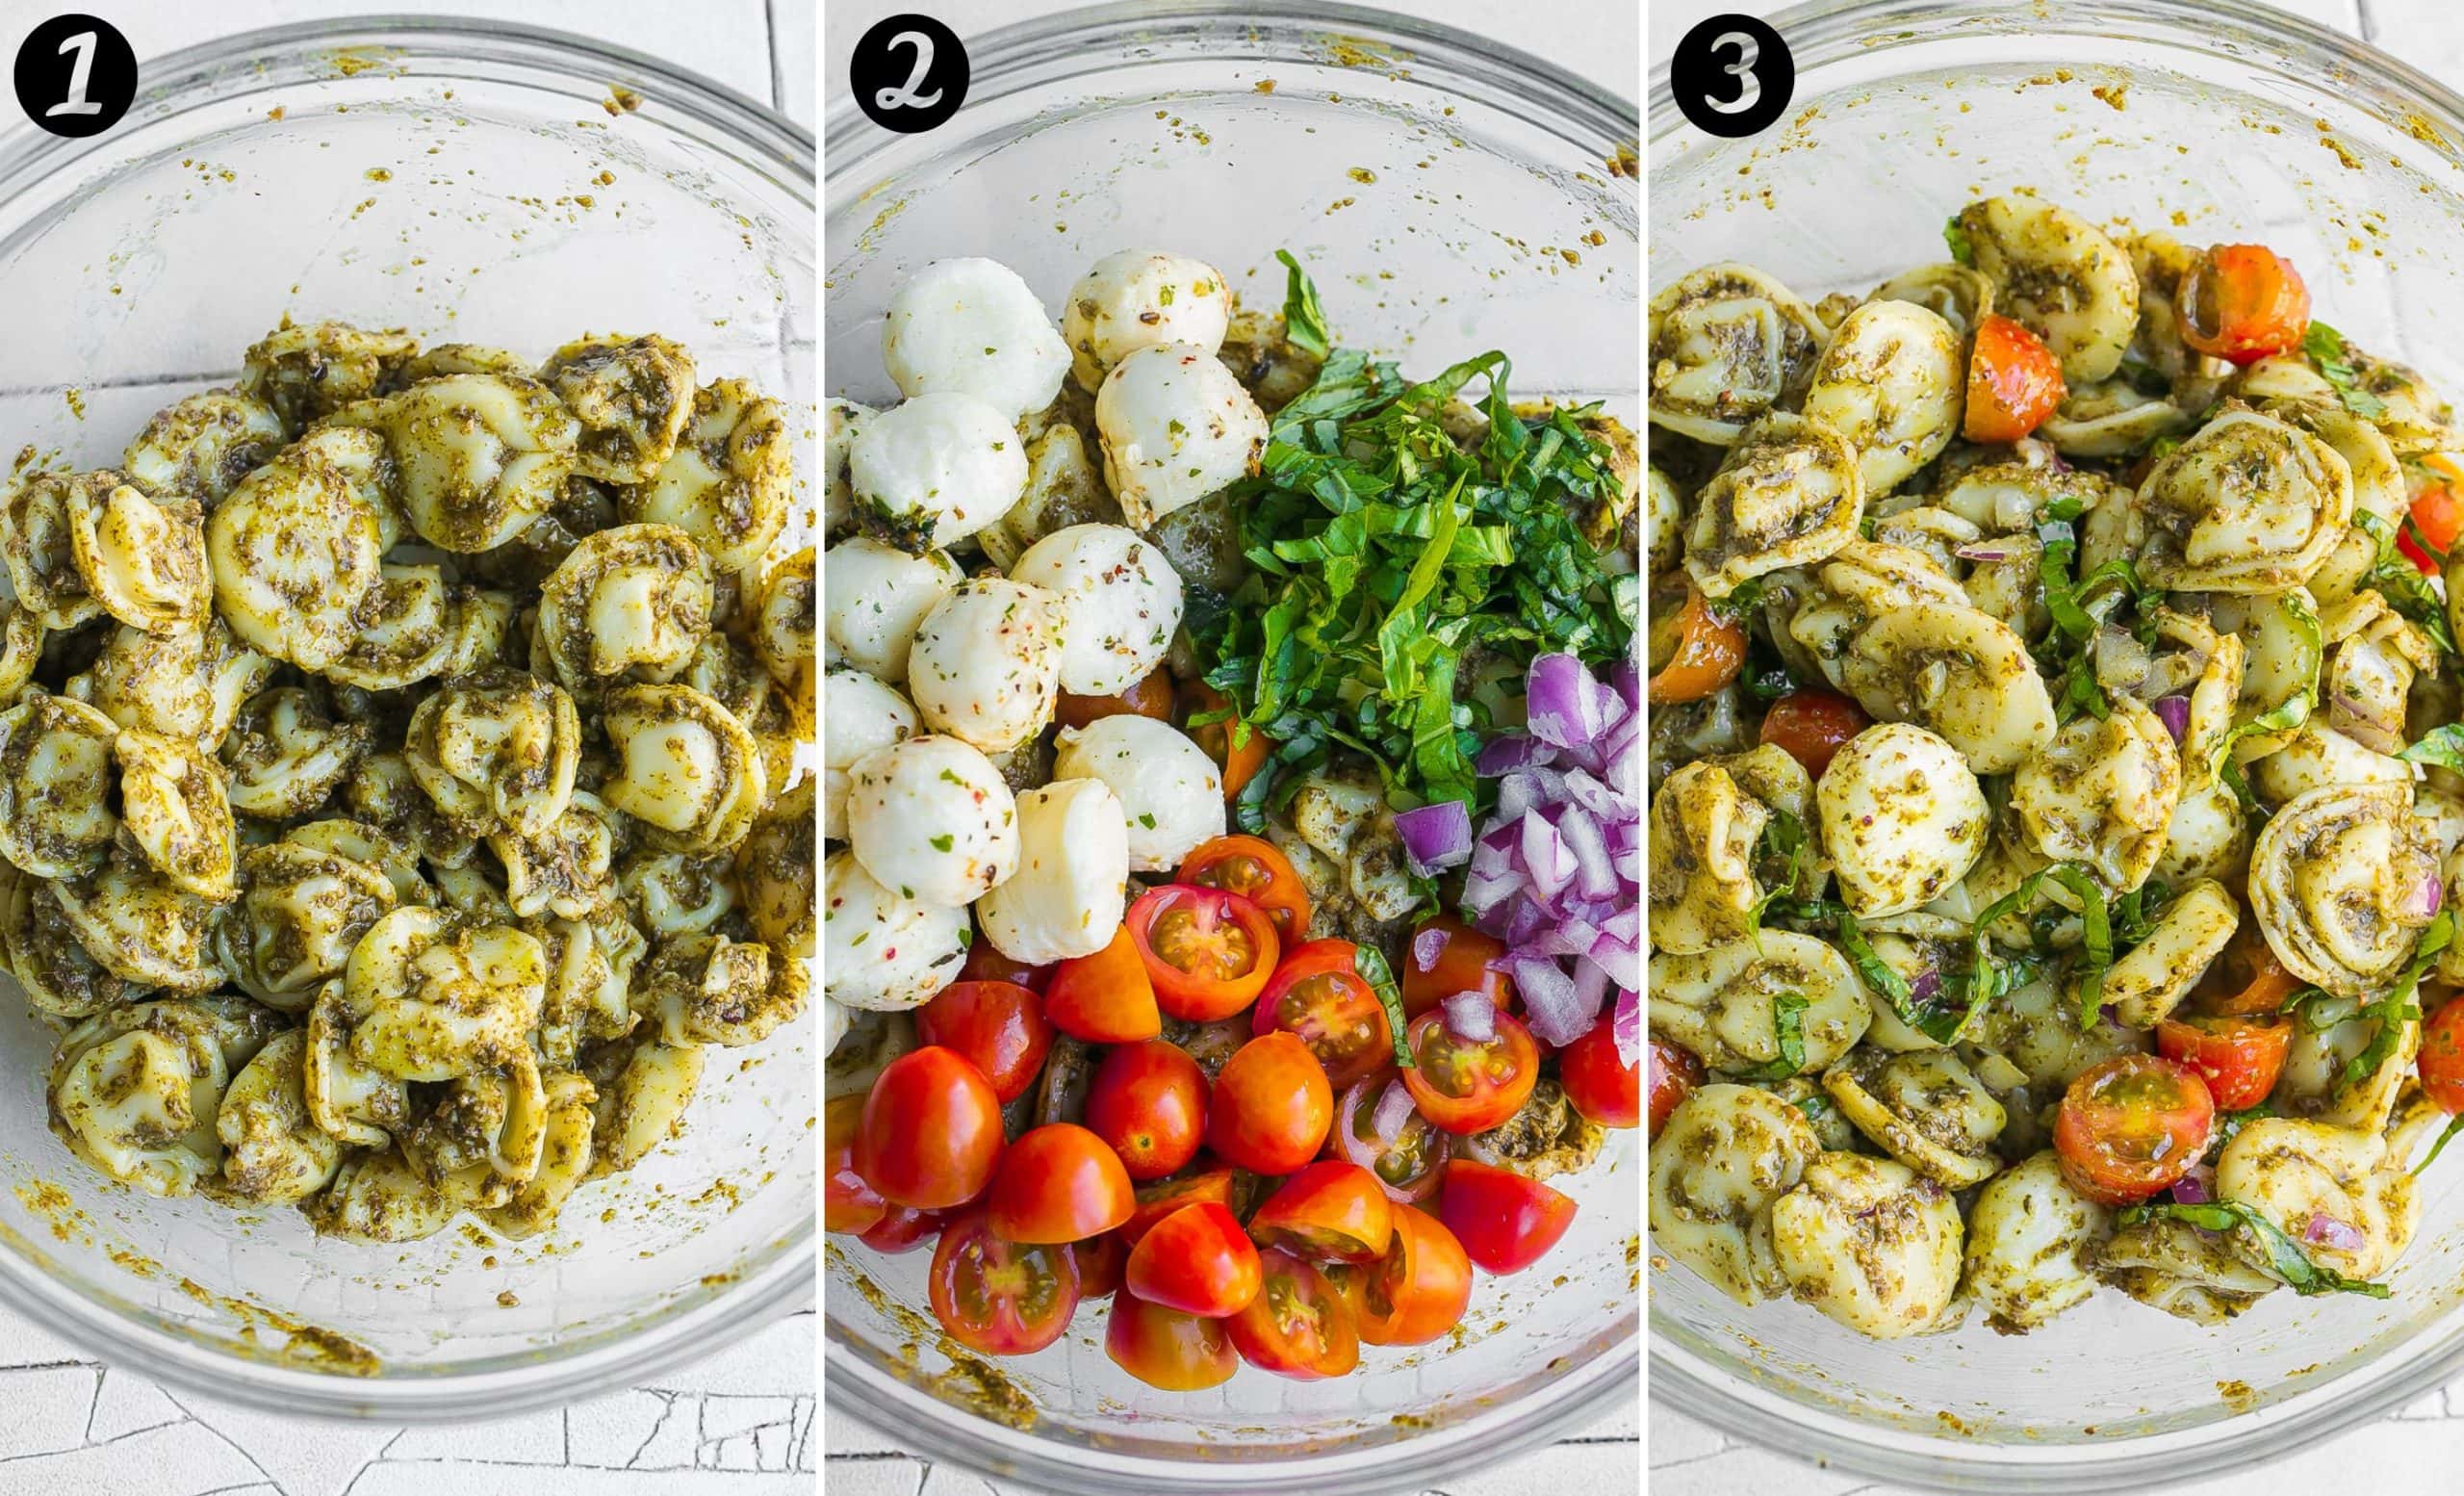 How to make tortellini salad. 